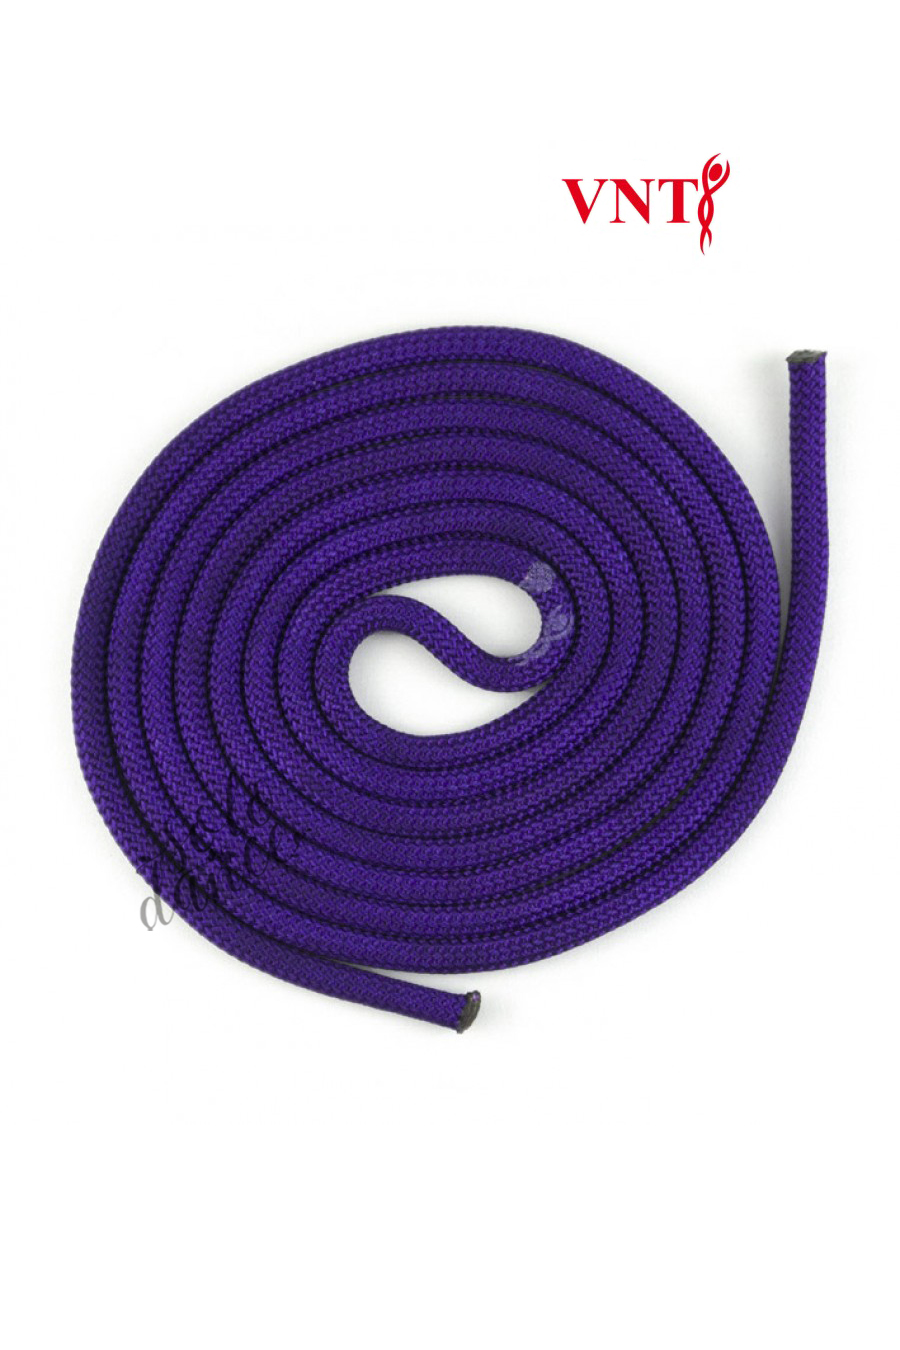 Rope Venturelli for rythmic gymnastic PL2-217 Dark Purple